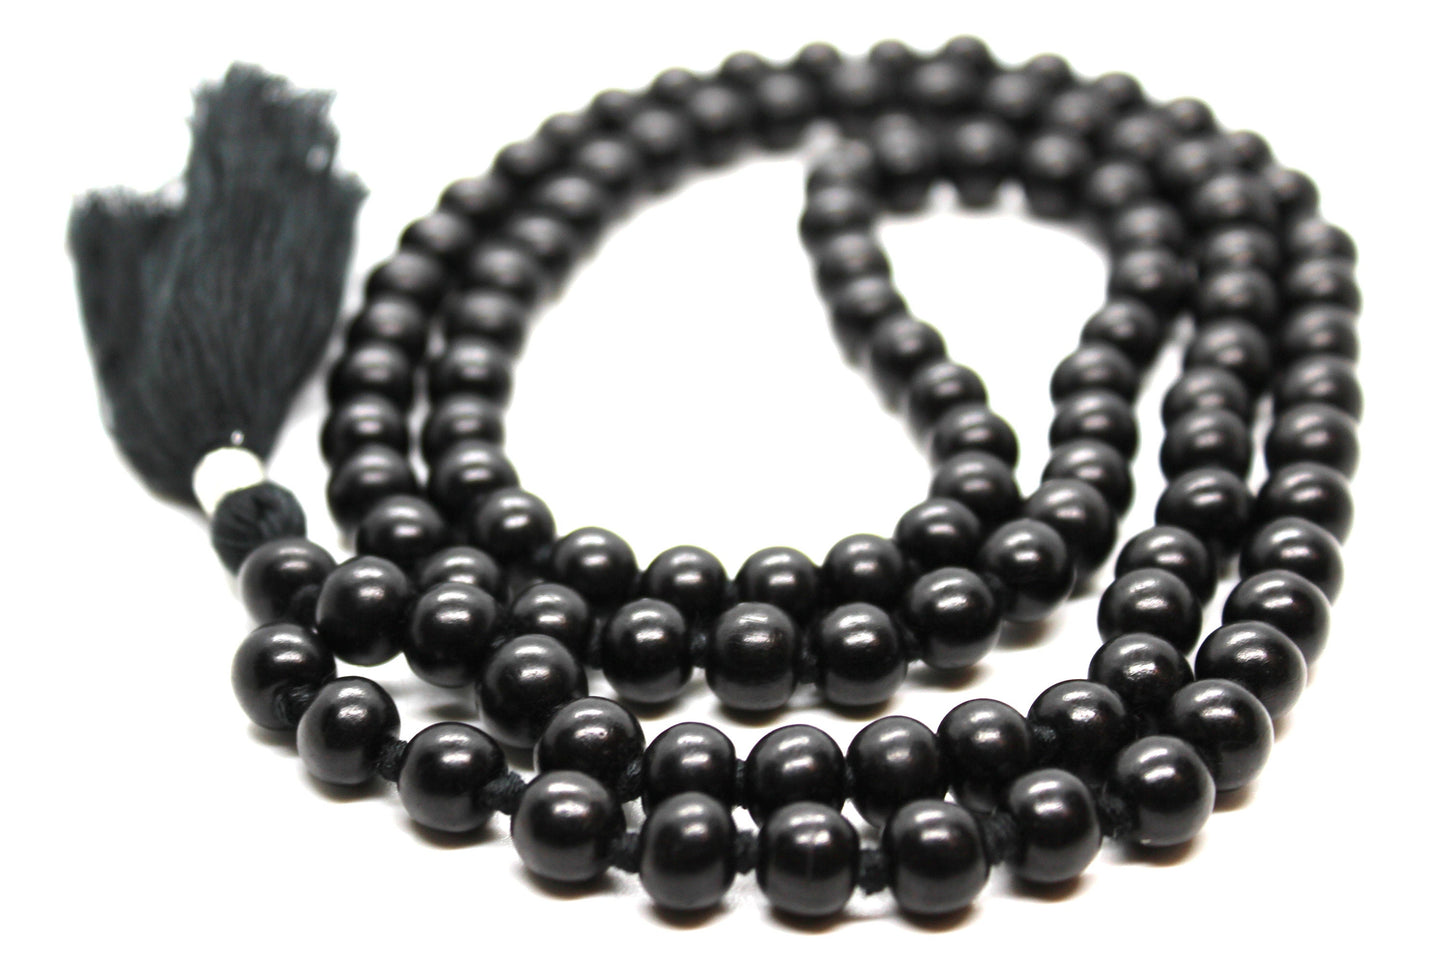 PROTECTION MALA, Ebony Wood Mala Necklace Knotted 8mm beads, 108 Ebony Japa Mala, Mens Wood Bead Necklace, Black Wood Rosary Prayer Beads